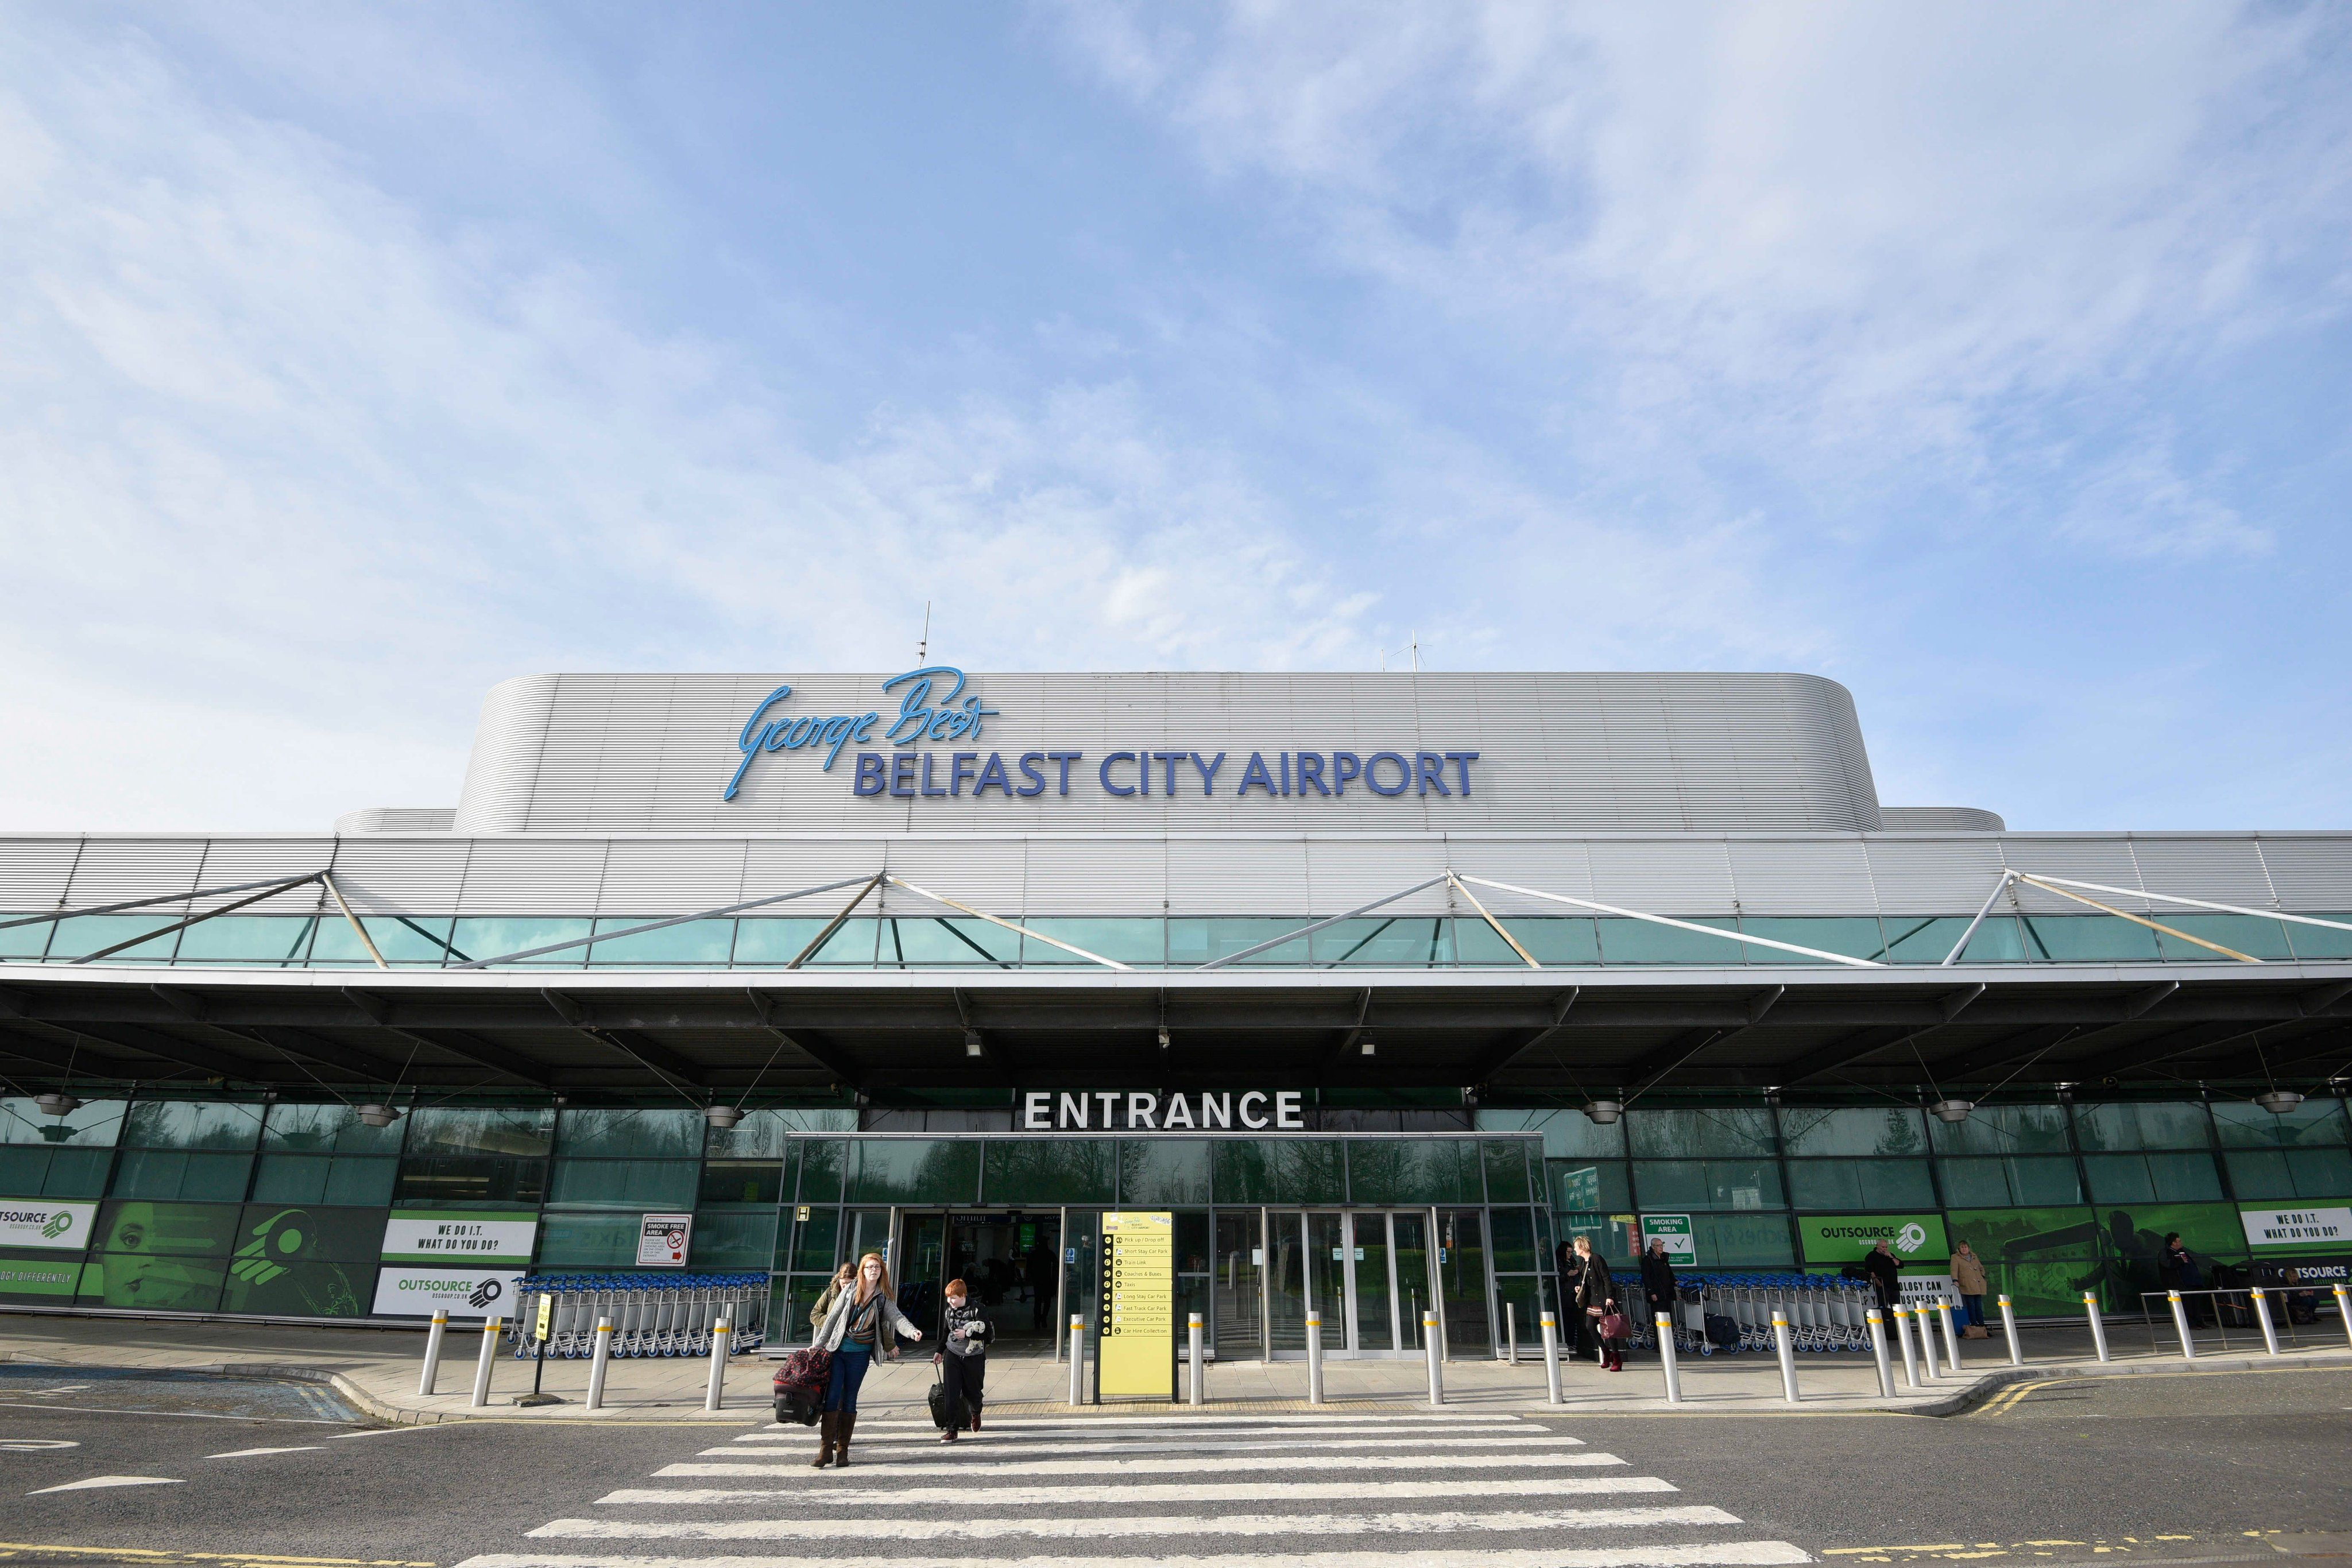 George Best Belfast City Airport in Northern Ireland